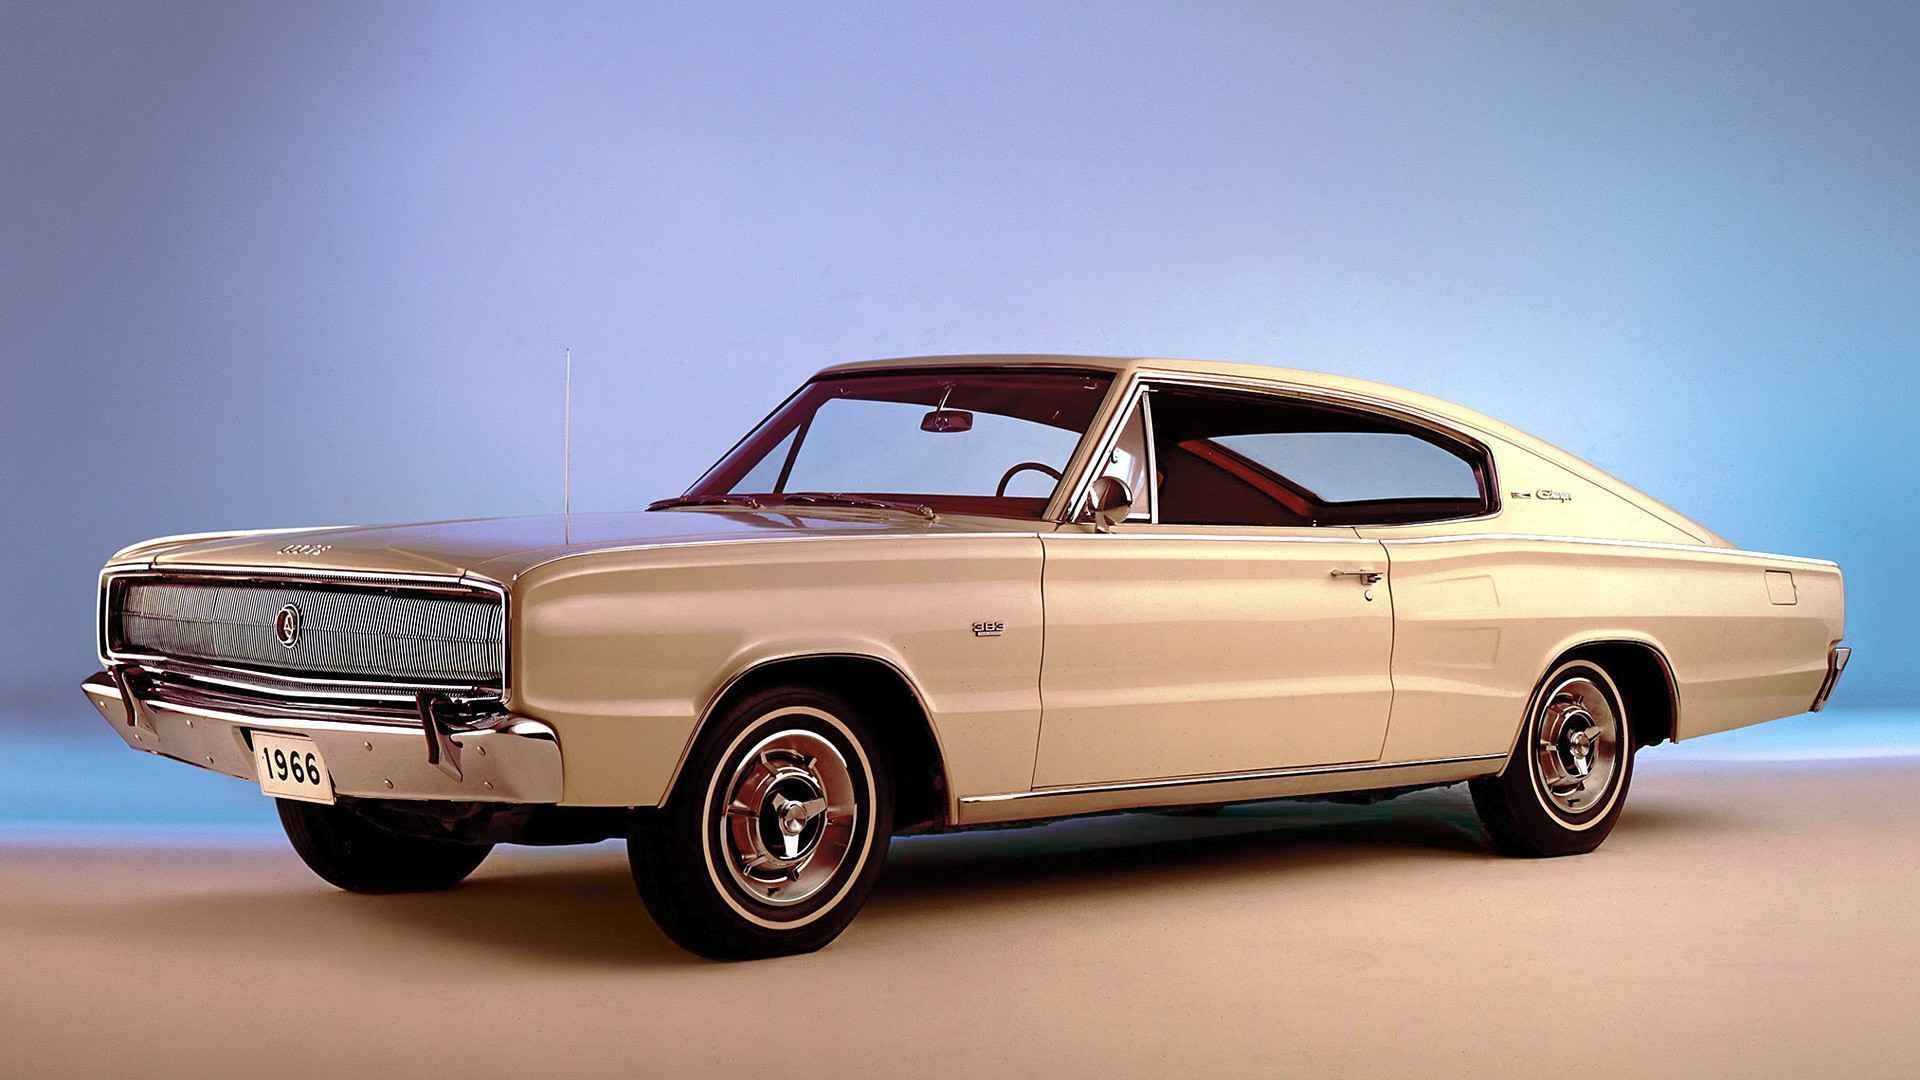 Dodge 1966 Year Vehicle Dodge Charger Pop Up Headlights Beige 1920x1080